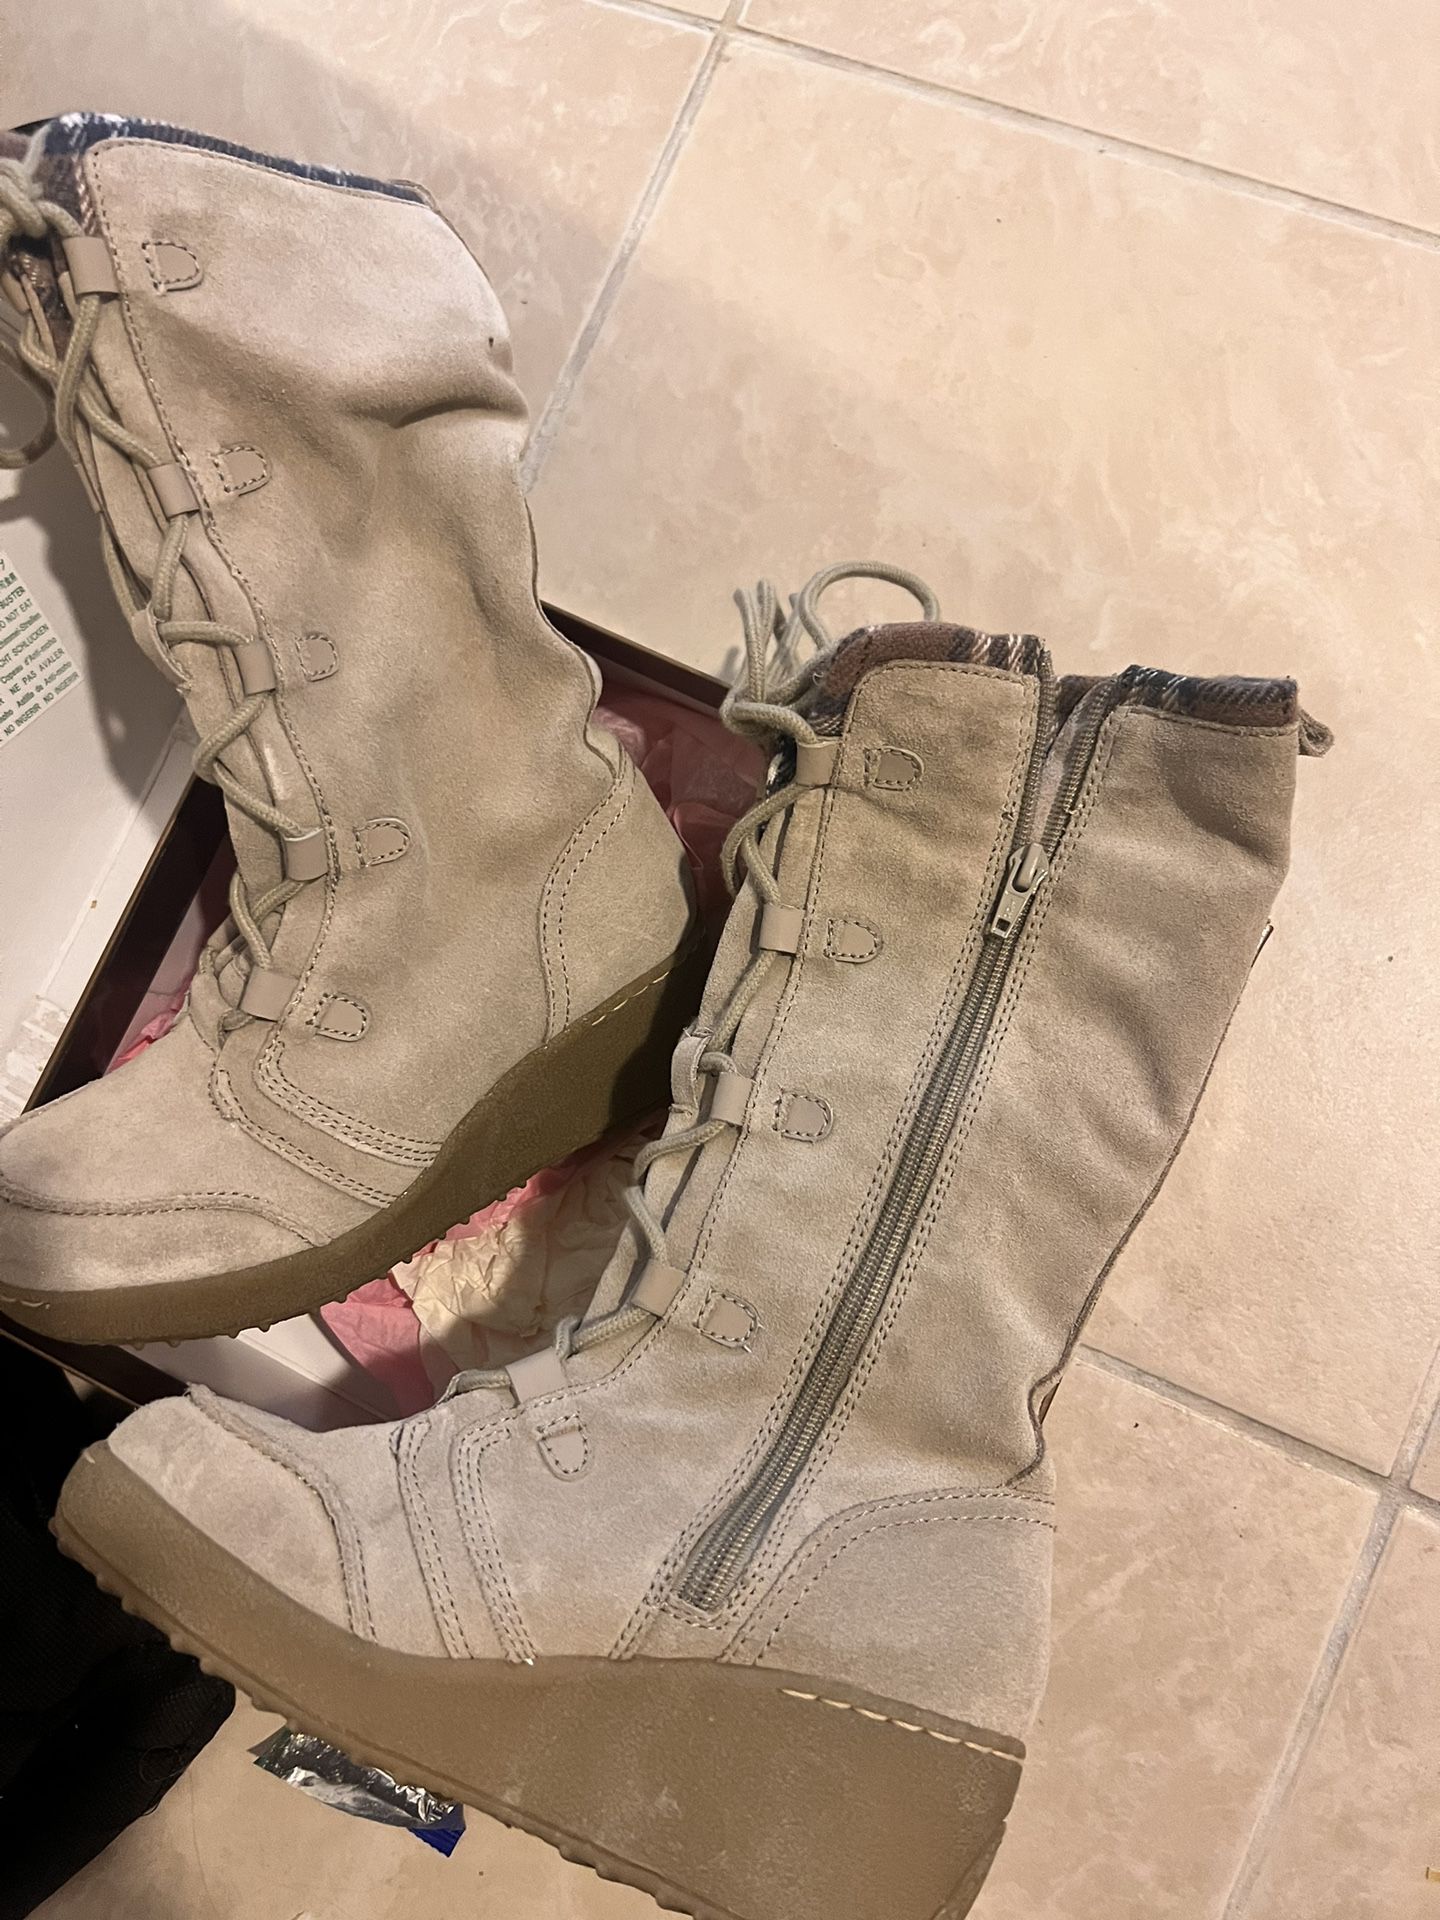 Aldo boots